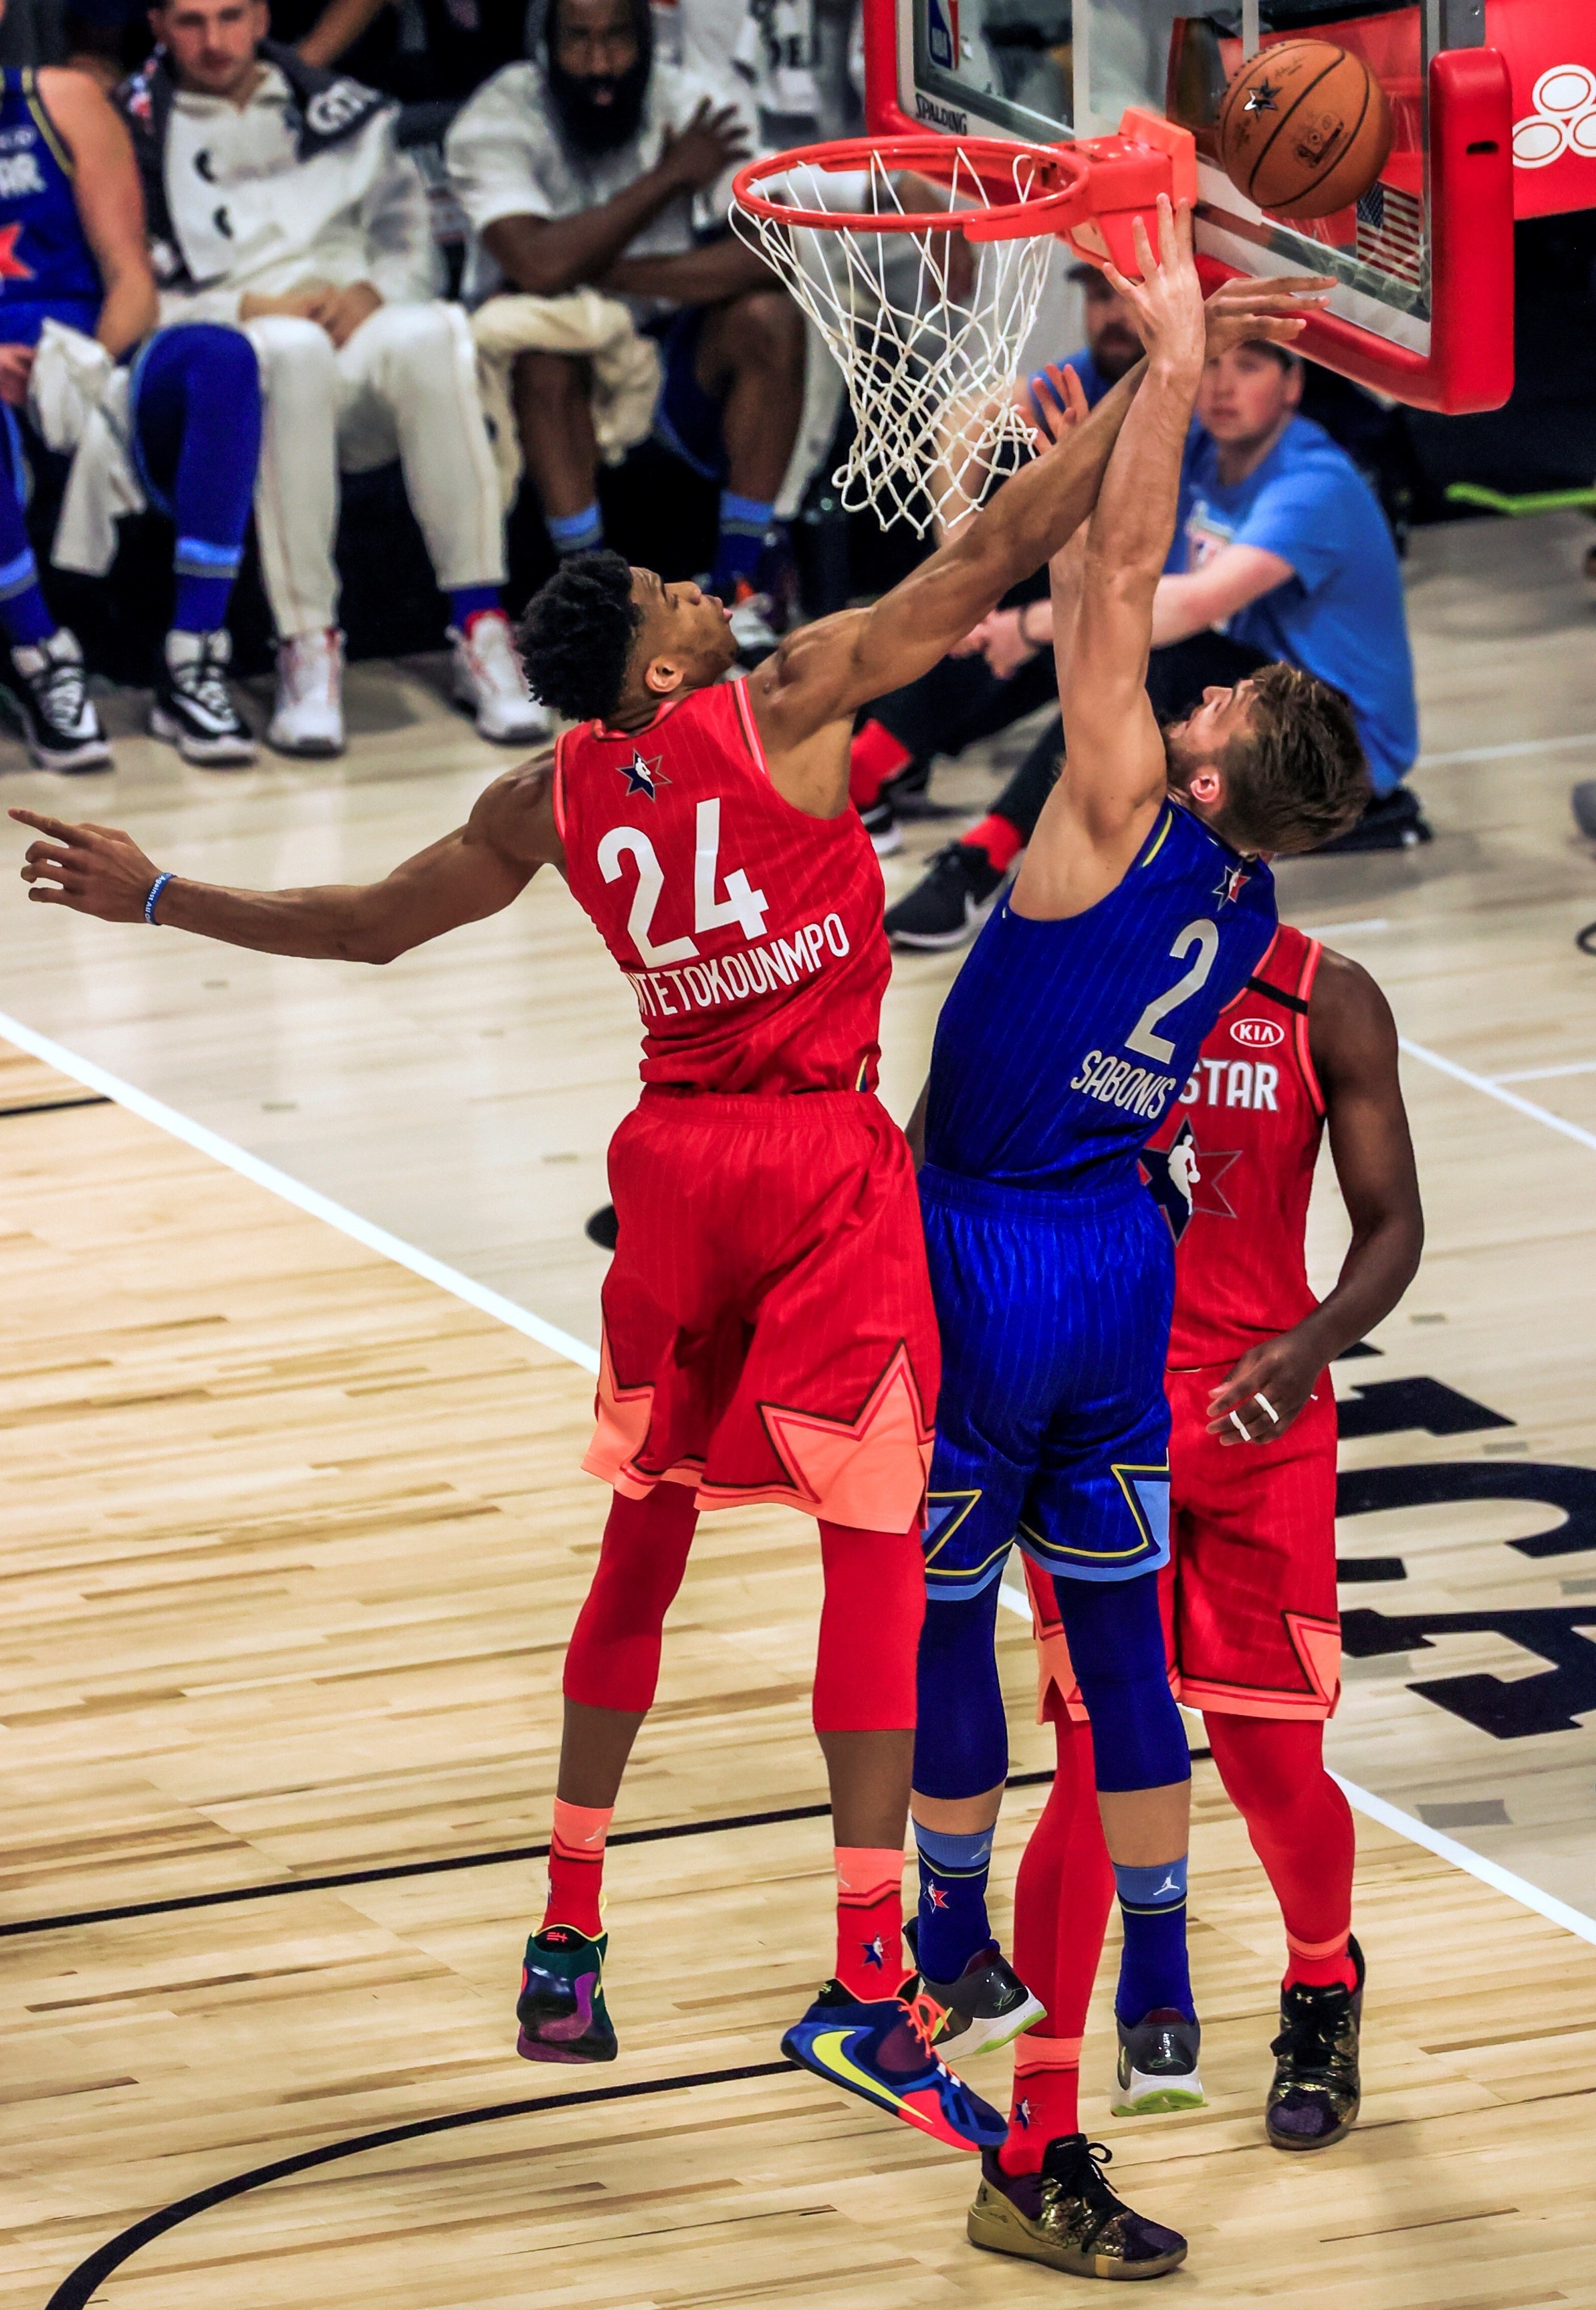 El 'All-star' recupera la intensidad para homenajear a Kobe Bryant